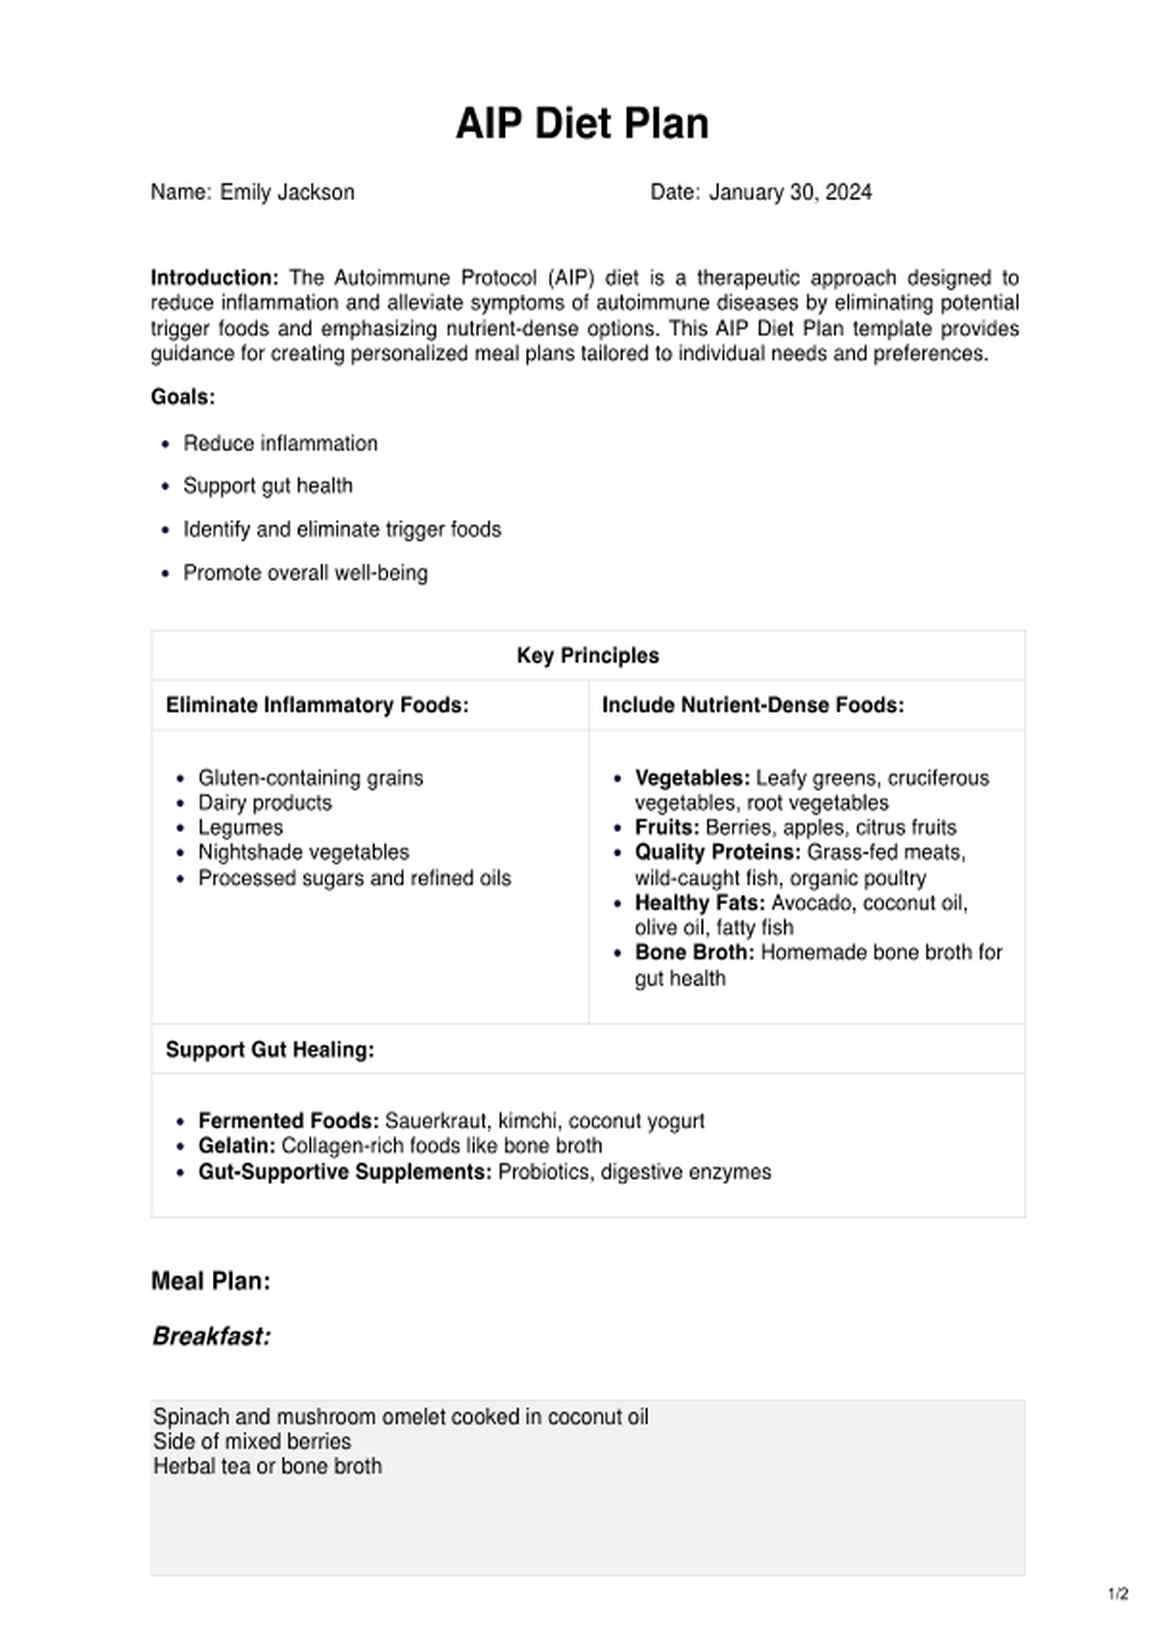 AIP Diet Plan PDF Example